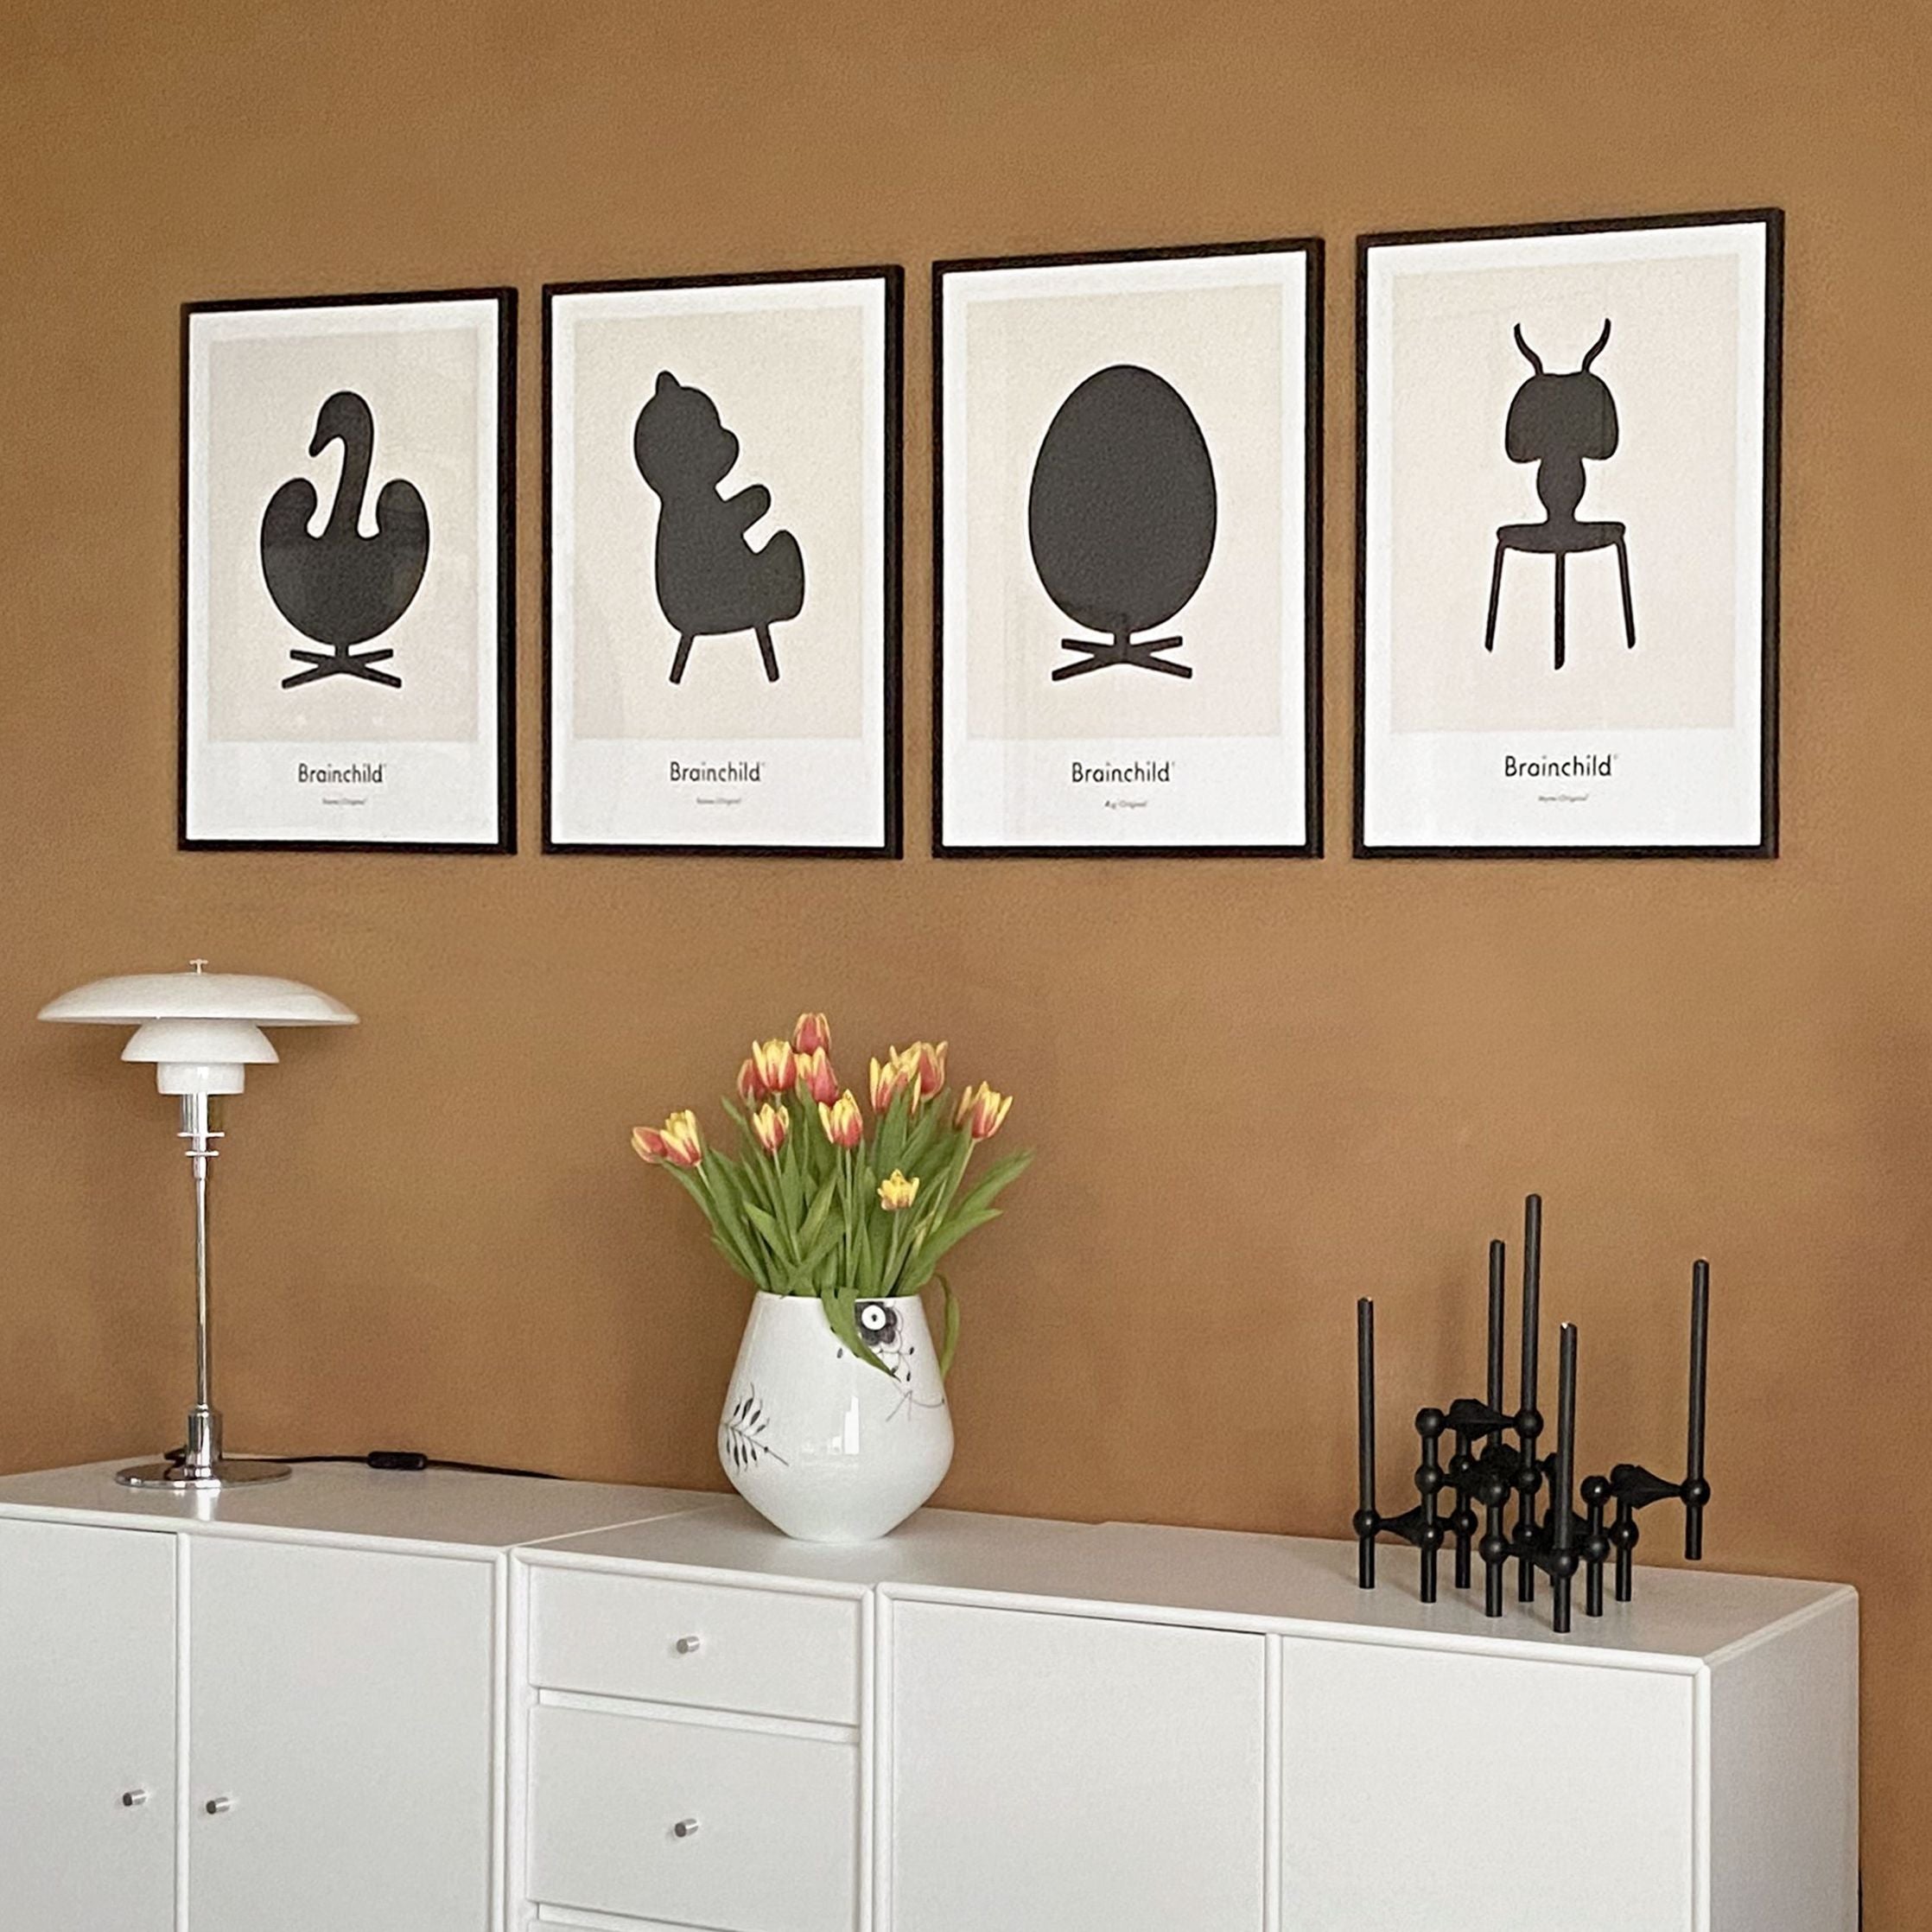 Brainchild Teddybär Design Icon Poster, Rahmen aus schwarz lackiertem Holz A5, grau